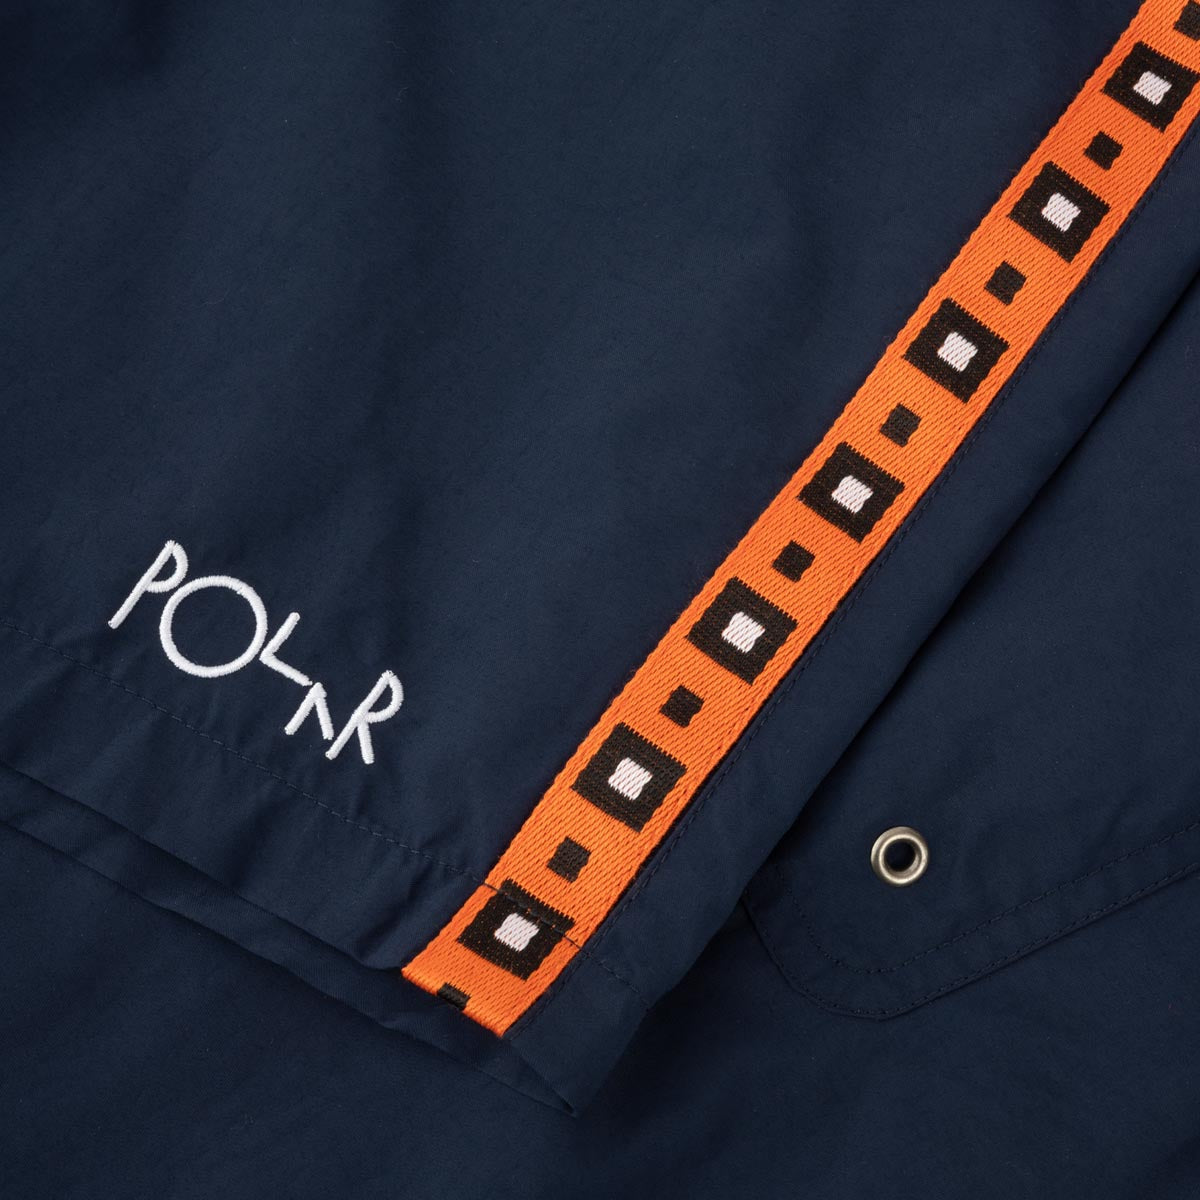 Polar Swim Square Stripe Shorts - Navy/Orange image 3